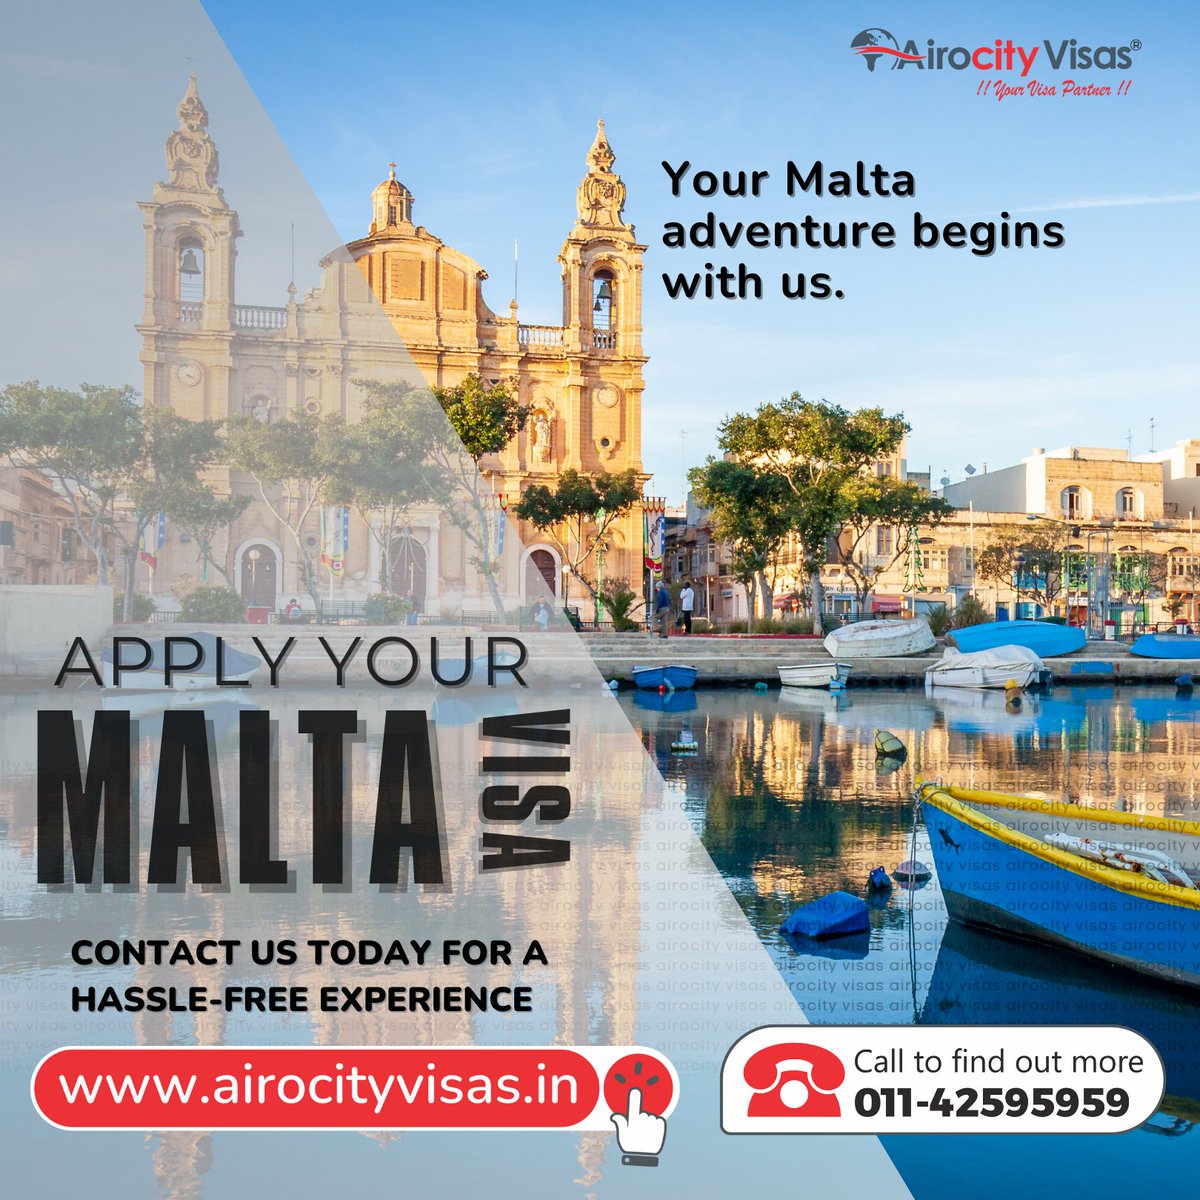 Simplify Your Malta Adventure: Secure Your Visa with Airocity Visas Today! 🇲🇹✈️ #MaltaVisa #AirocityVisas #TravelSimplified #ExploreMalta #VisaAssistance #SeamlessTravel #YourMaltaJourney #VisaMadeEasy #AirocityHospitality #StartExploring